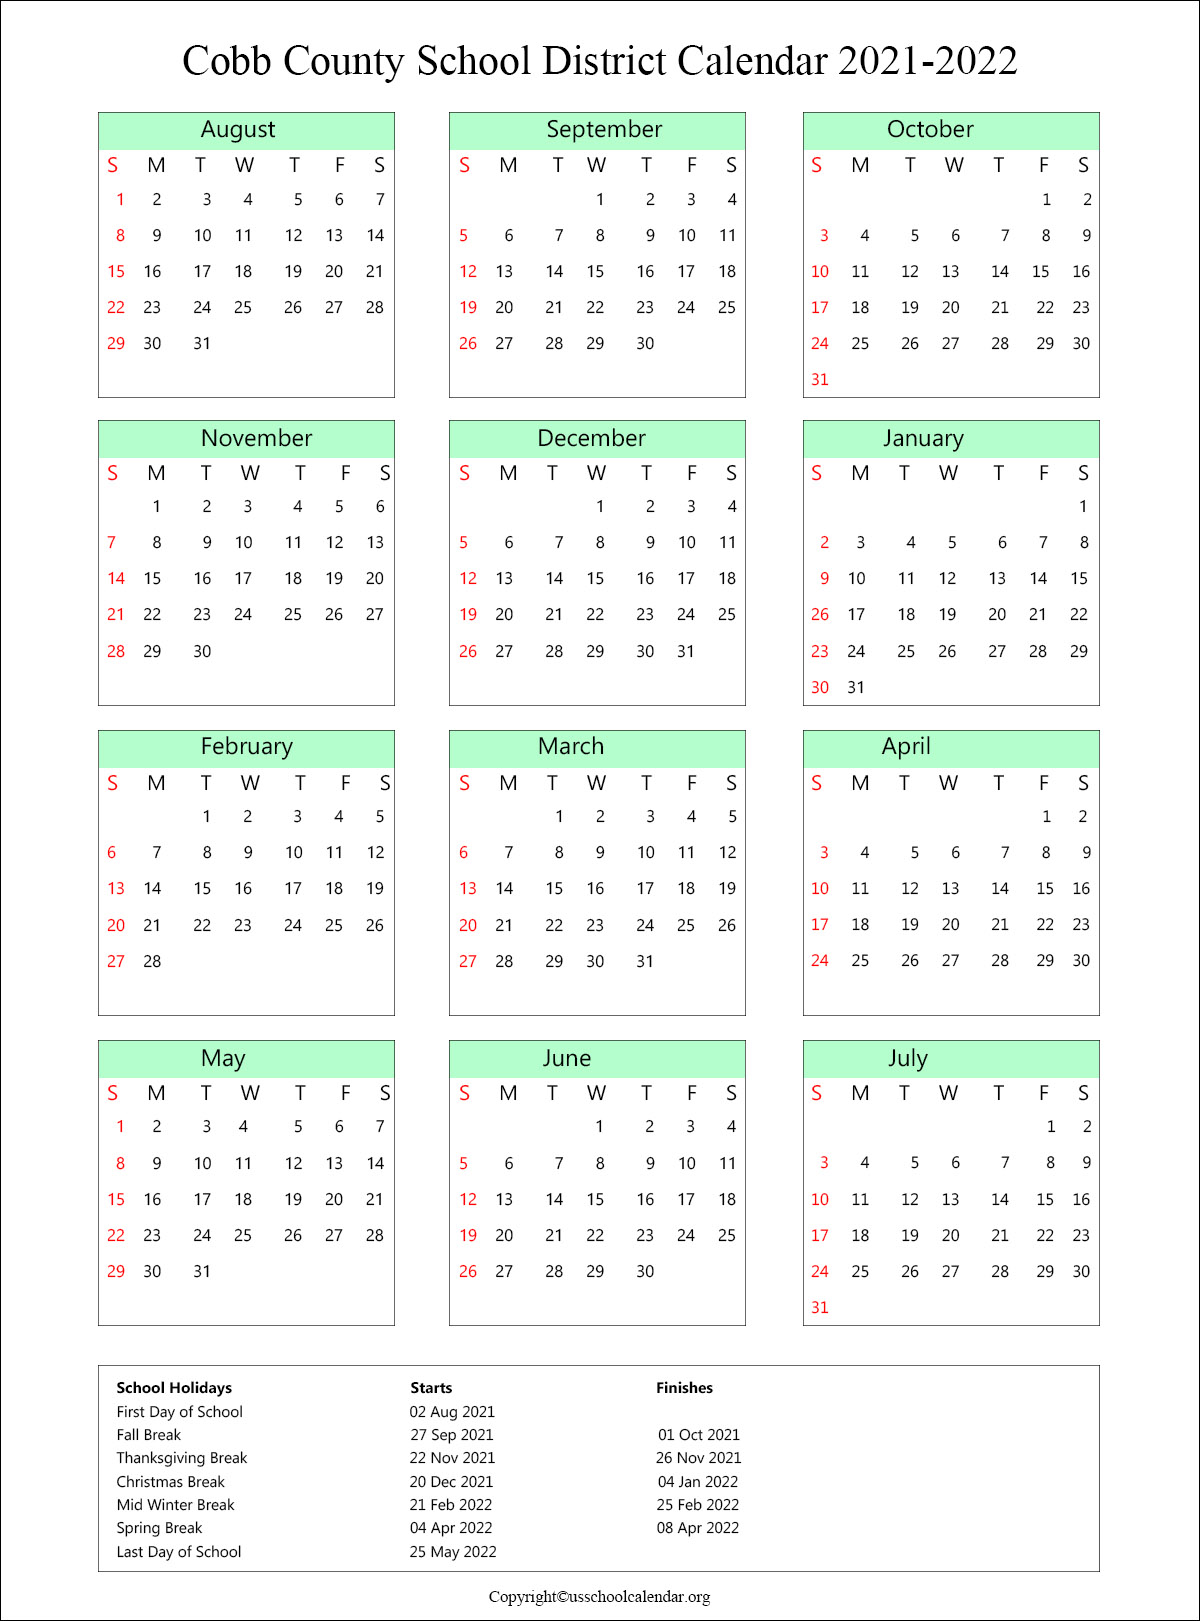 Cobb County Calendar 2022 23 Cobb County School Calendar With Holidays 2021-2022